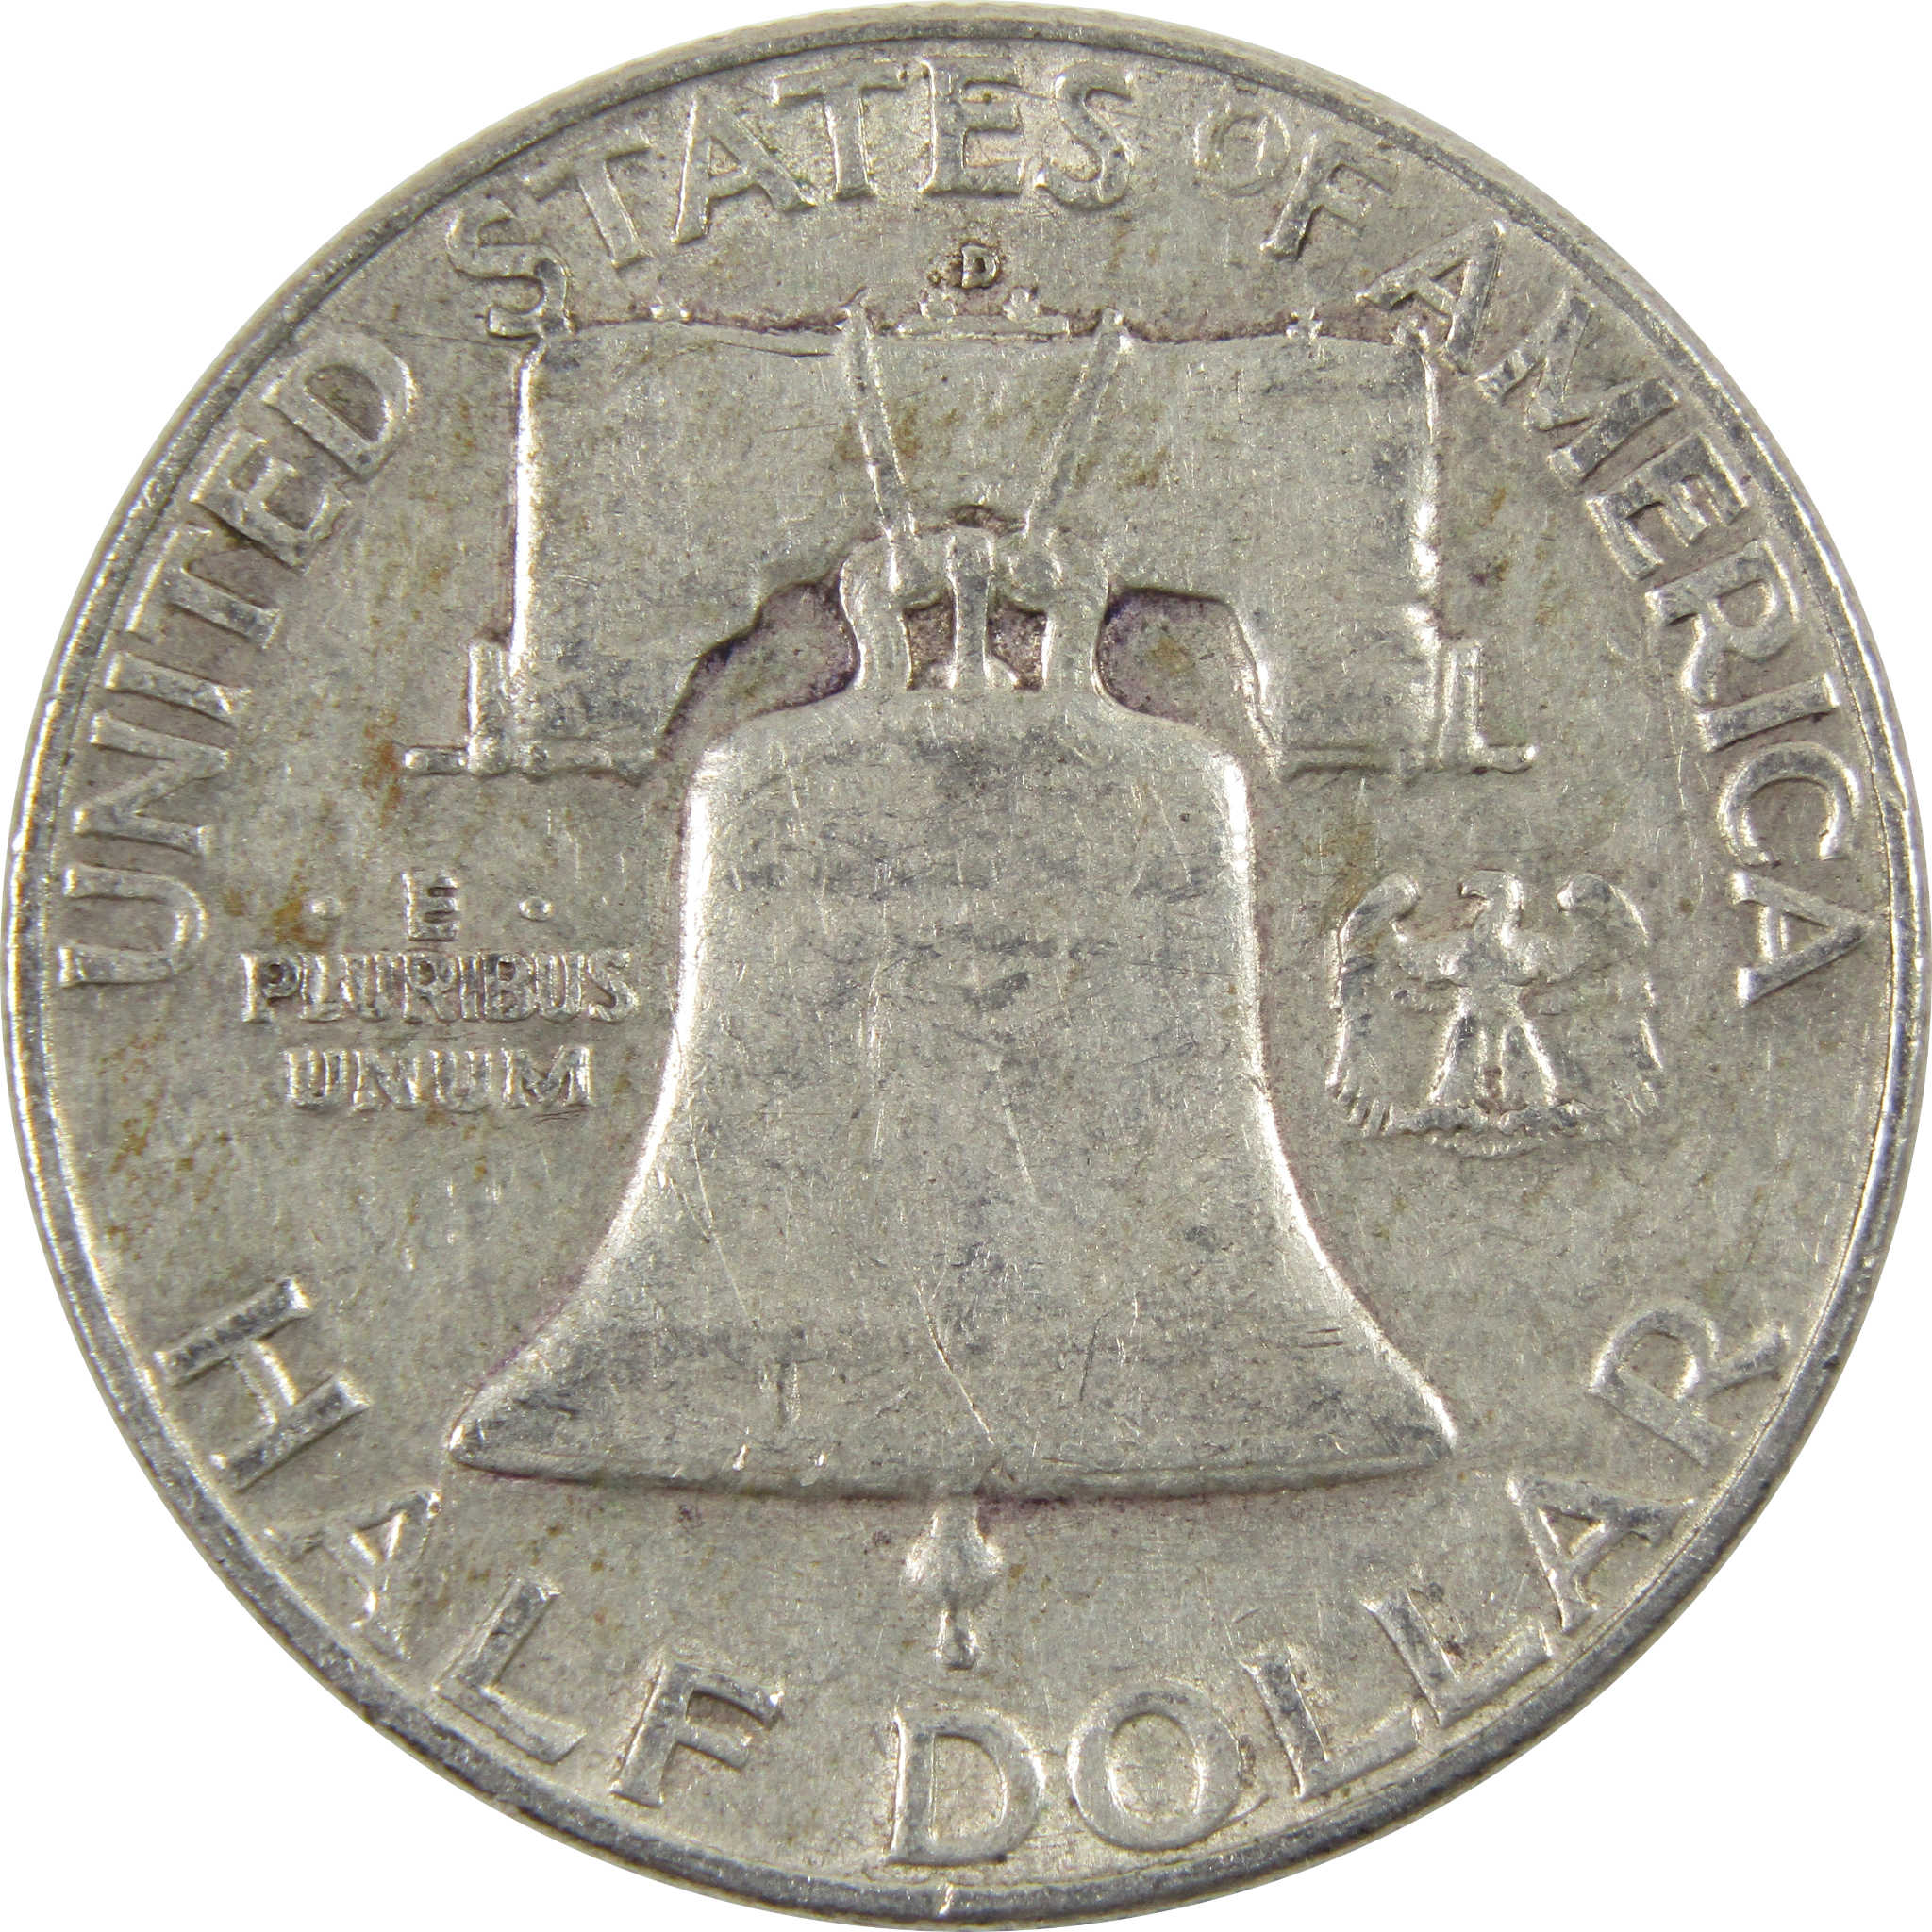 1960 D Franklin Half Dollar G Good 90% Silver 50c Coin